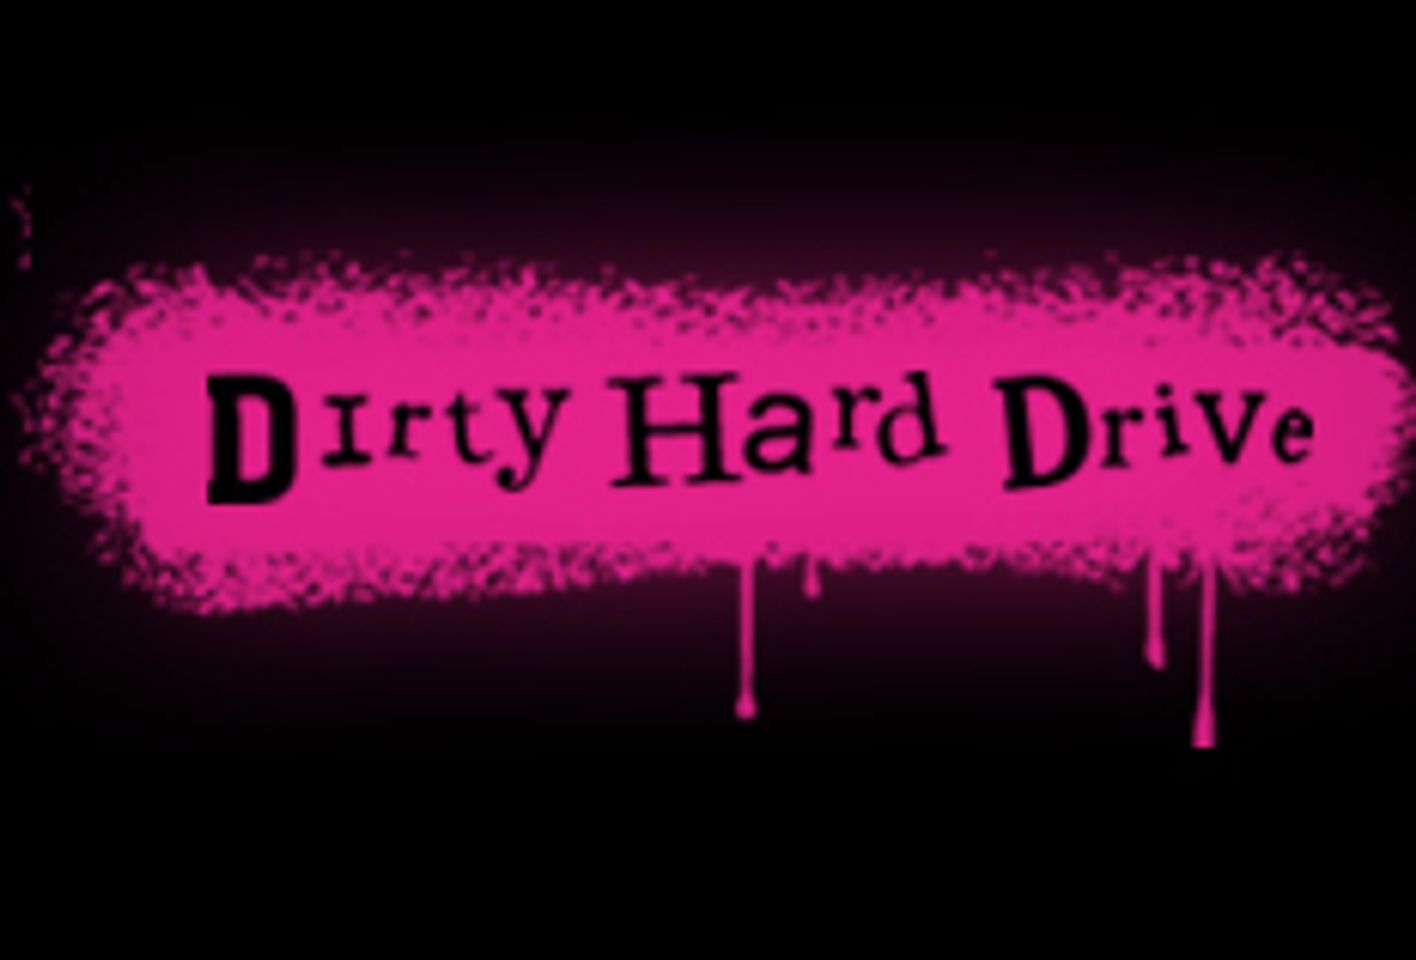 Dirty Hard Drive Launches LeeBangXXX.com